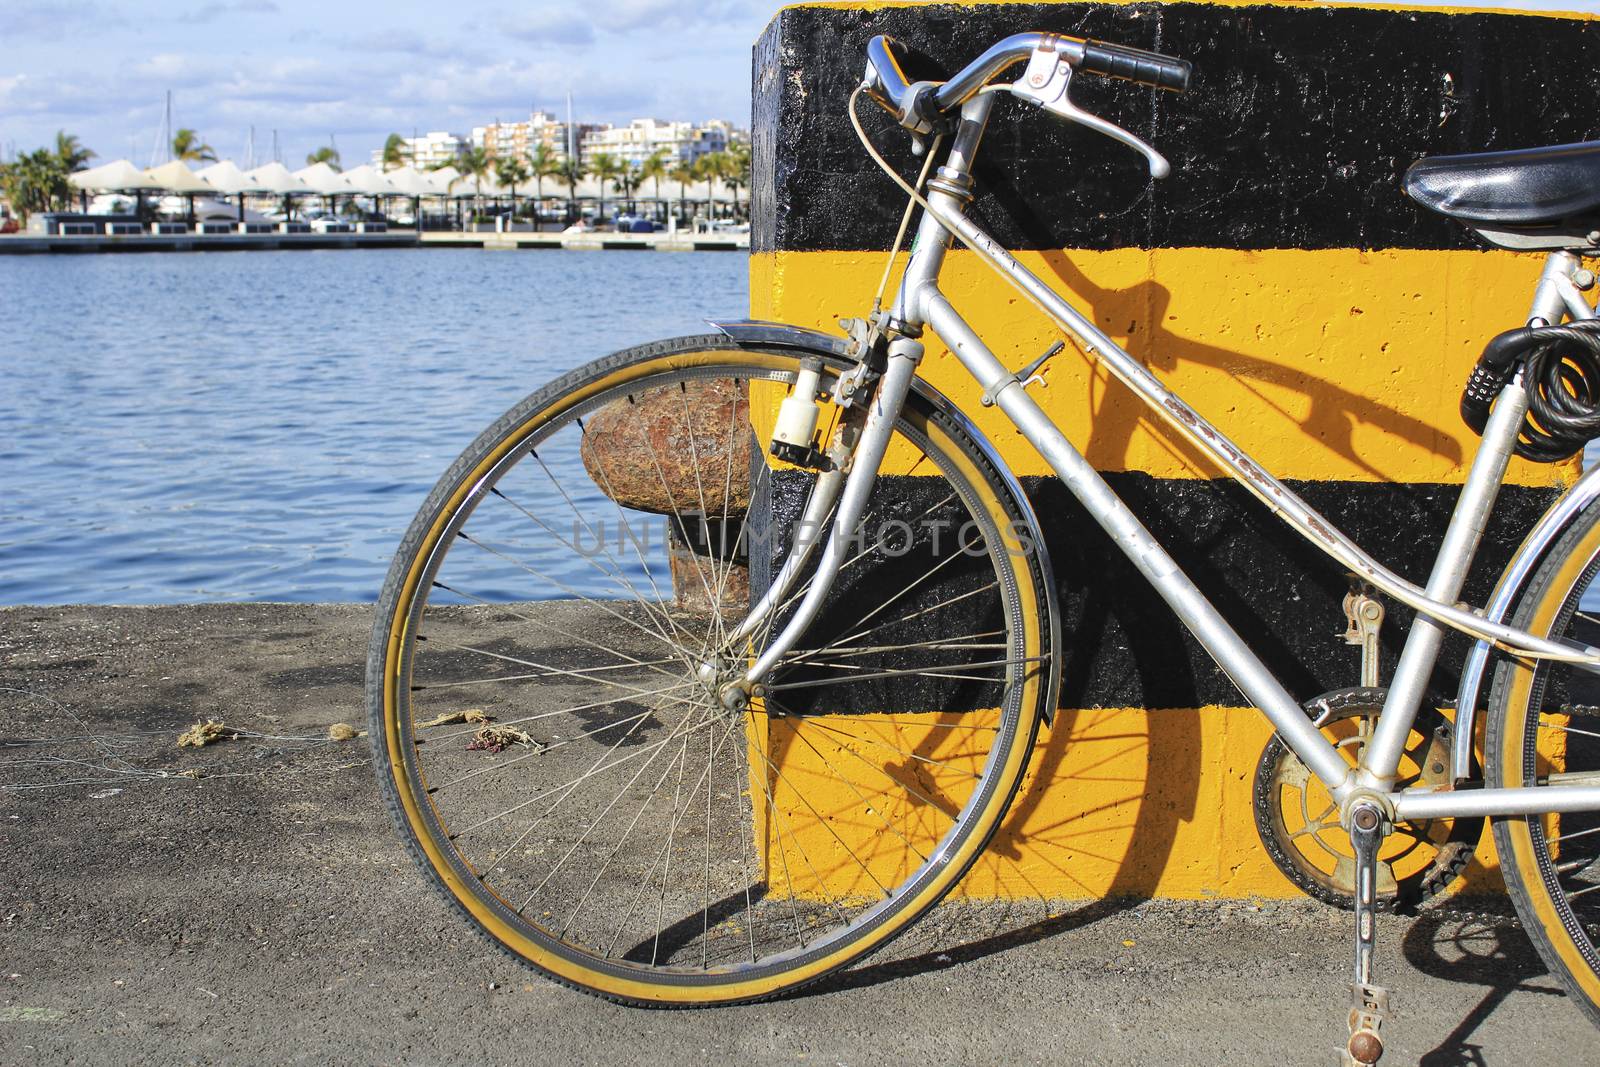 Vintage bicycle by the sea in Spain